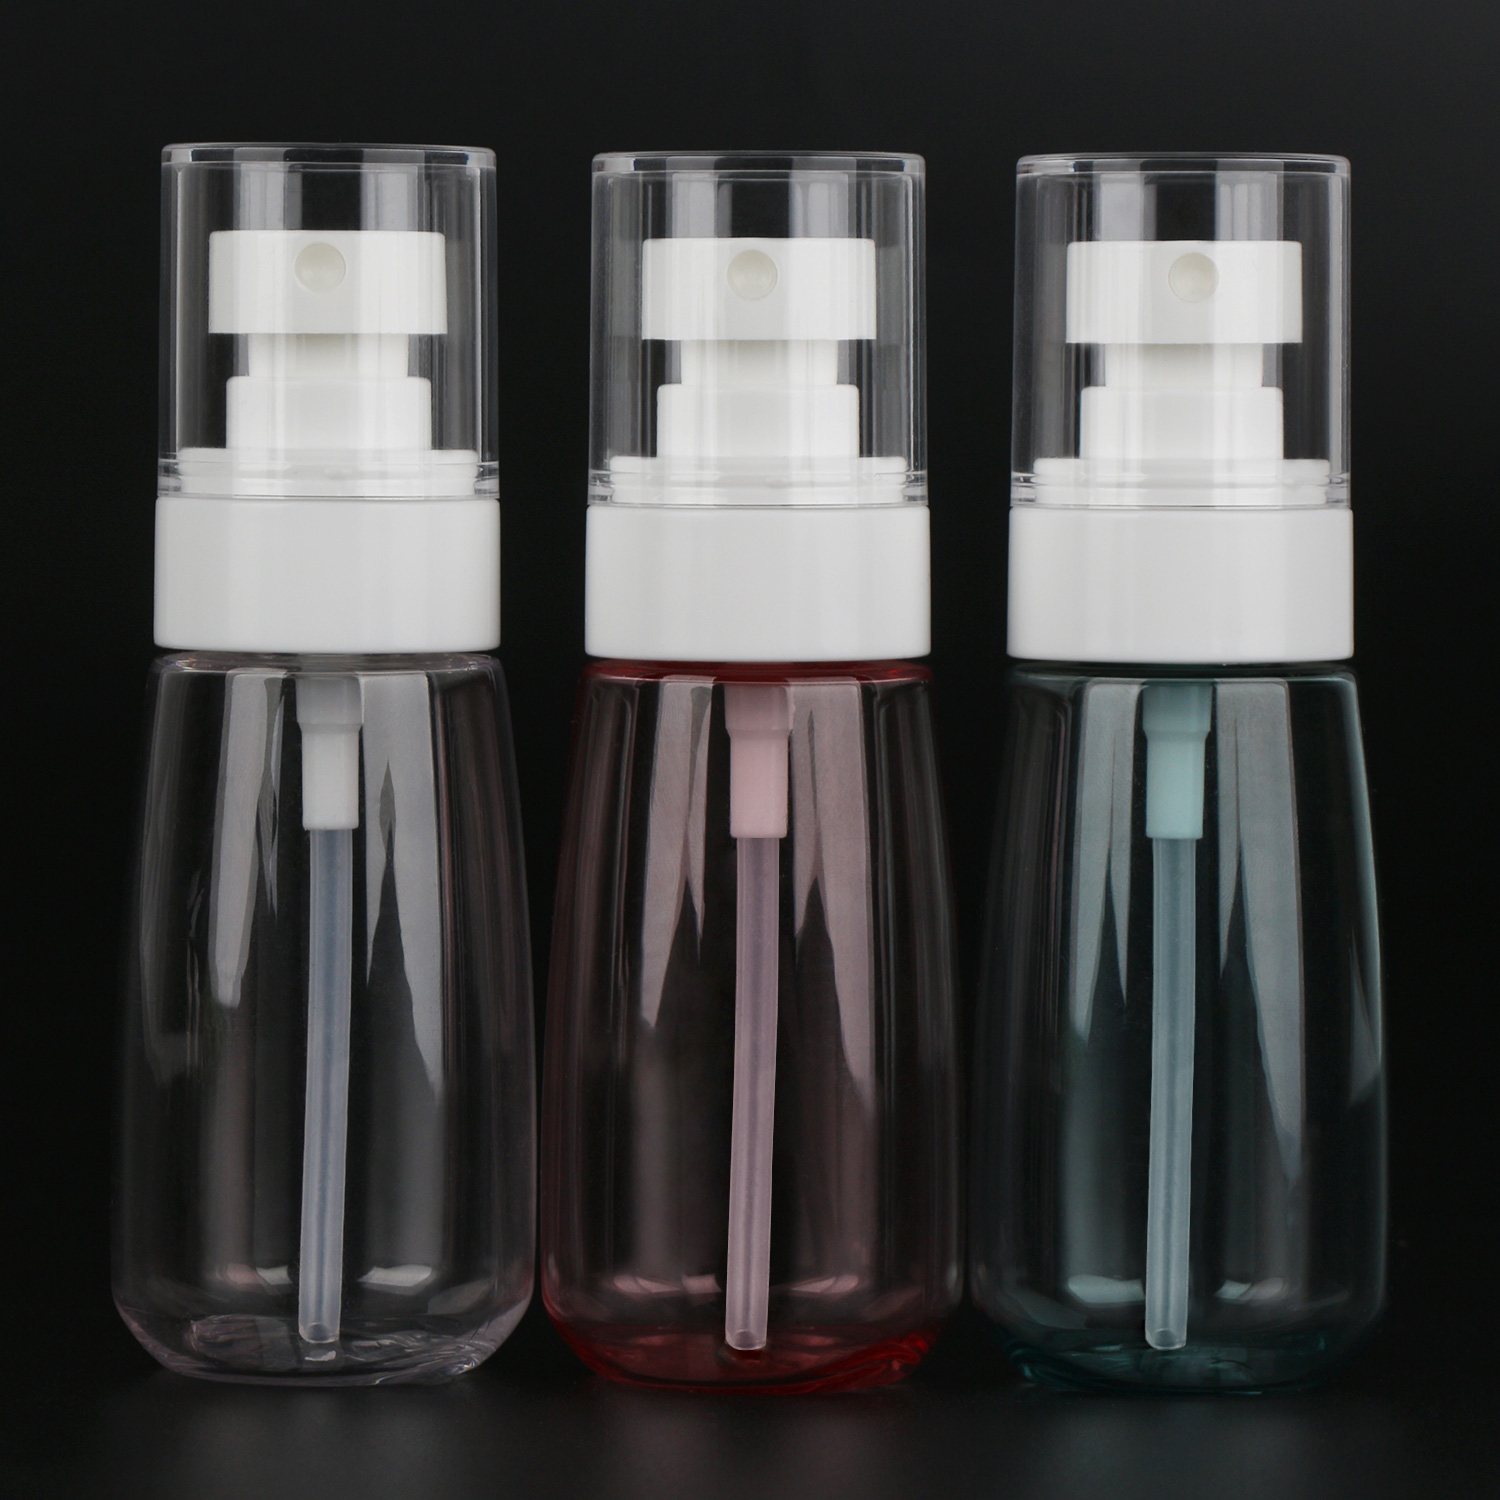 Segbeauty 3pcs 30ml/1oz Airless Fine Mist Spray Bottle Travel